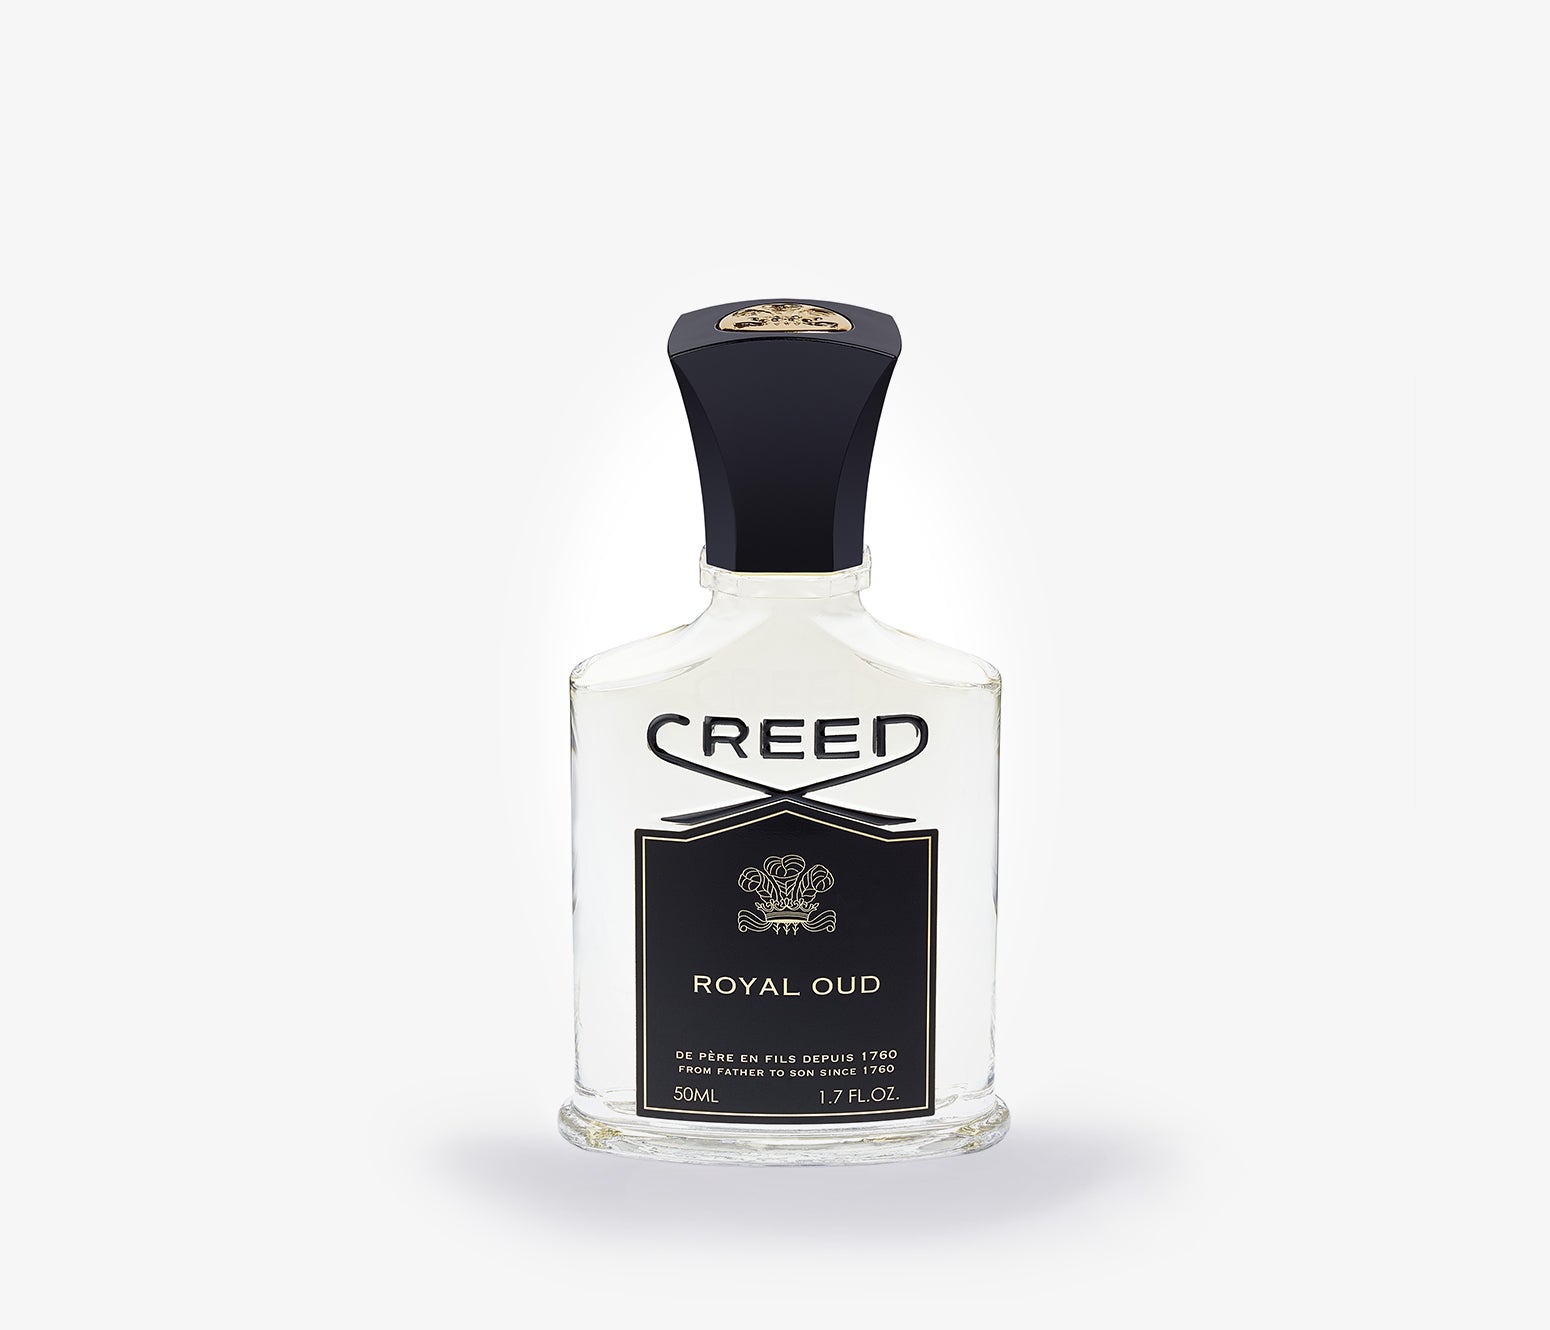 Creed - Royal Oud - 100ml - OVR001 - Product Image - Fragrance - Les Senteurs